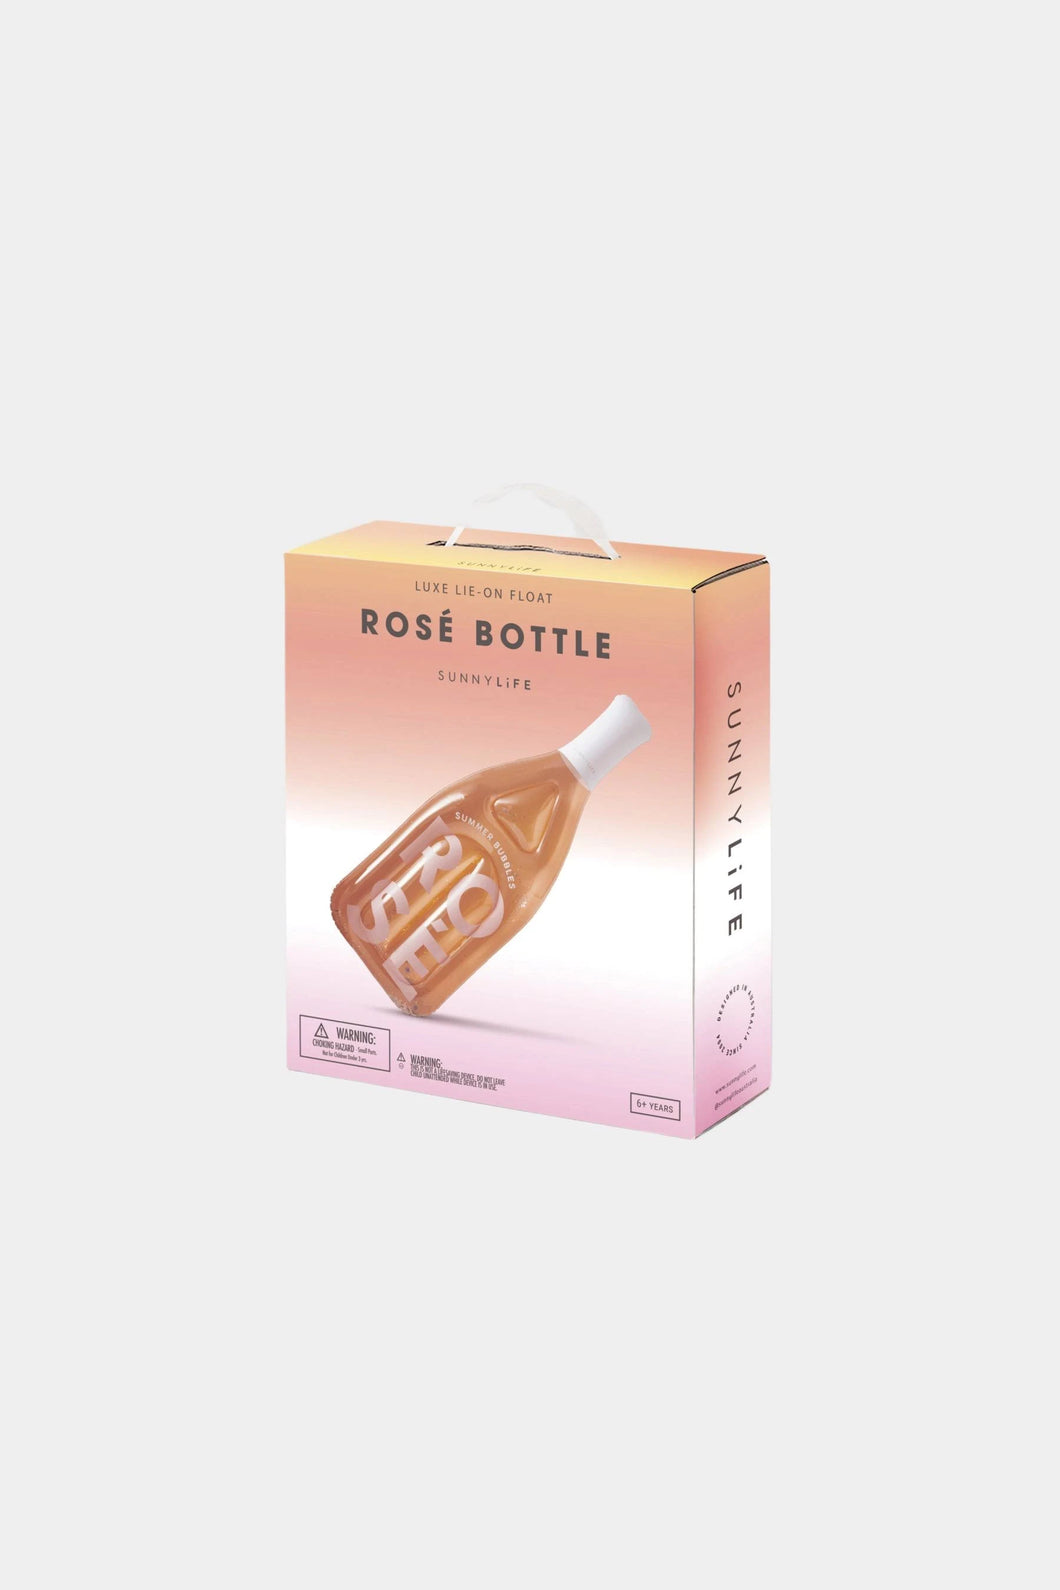 SunnyLife- Luxe Lie-on Float (Rosé Bottle)